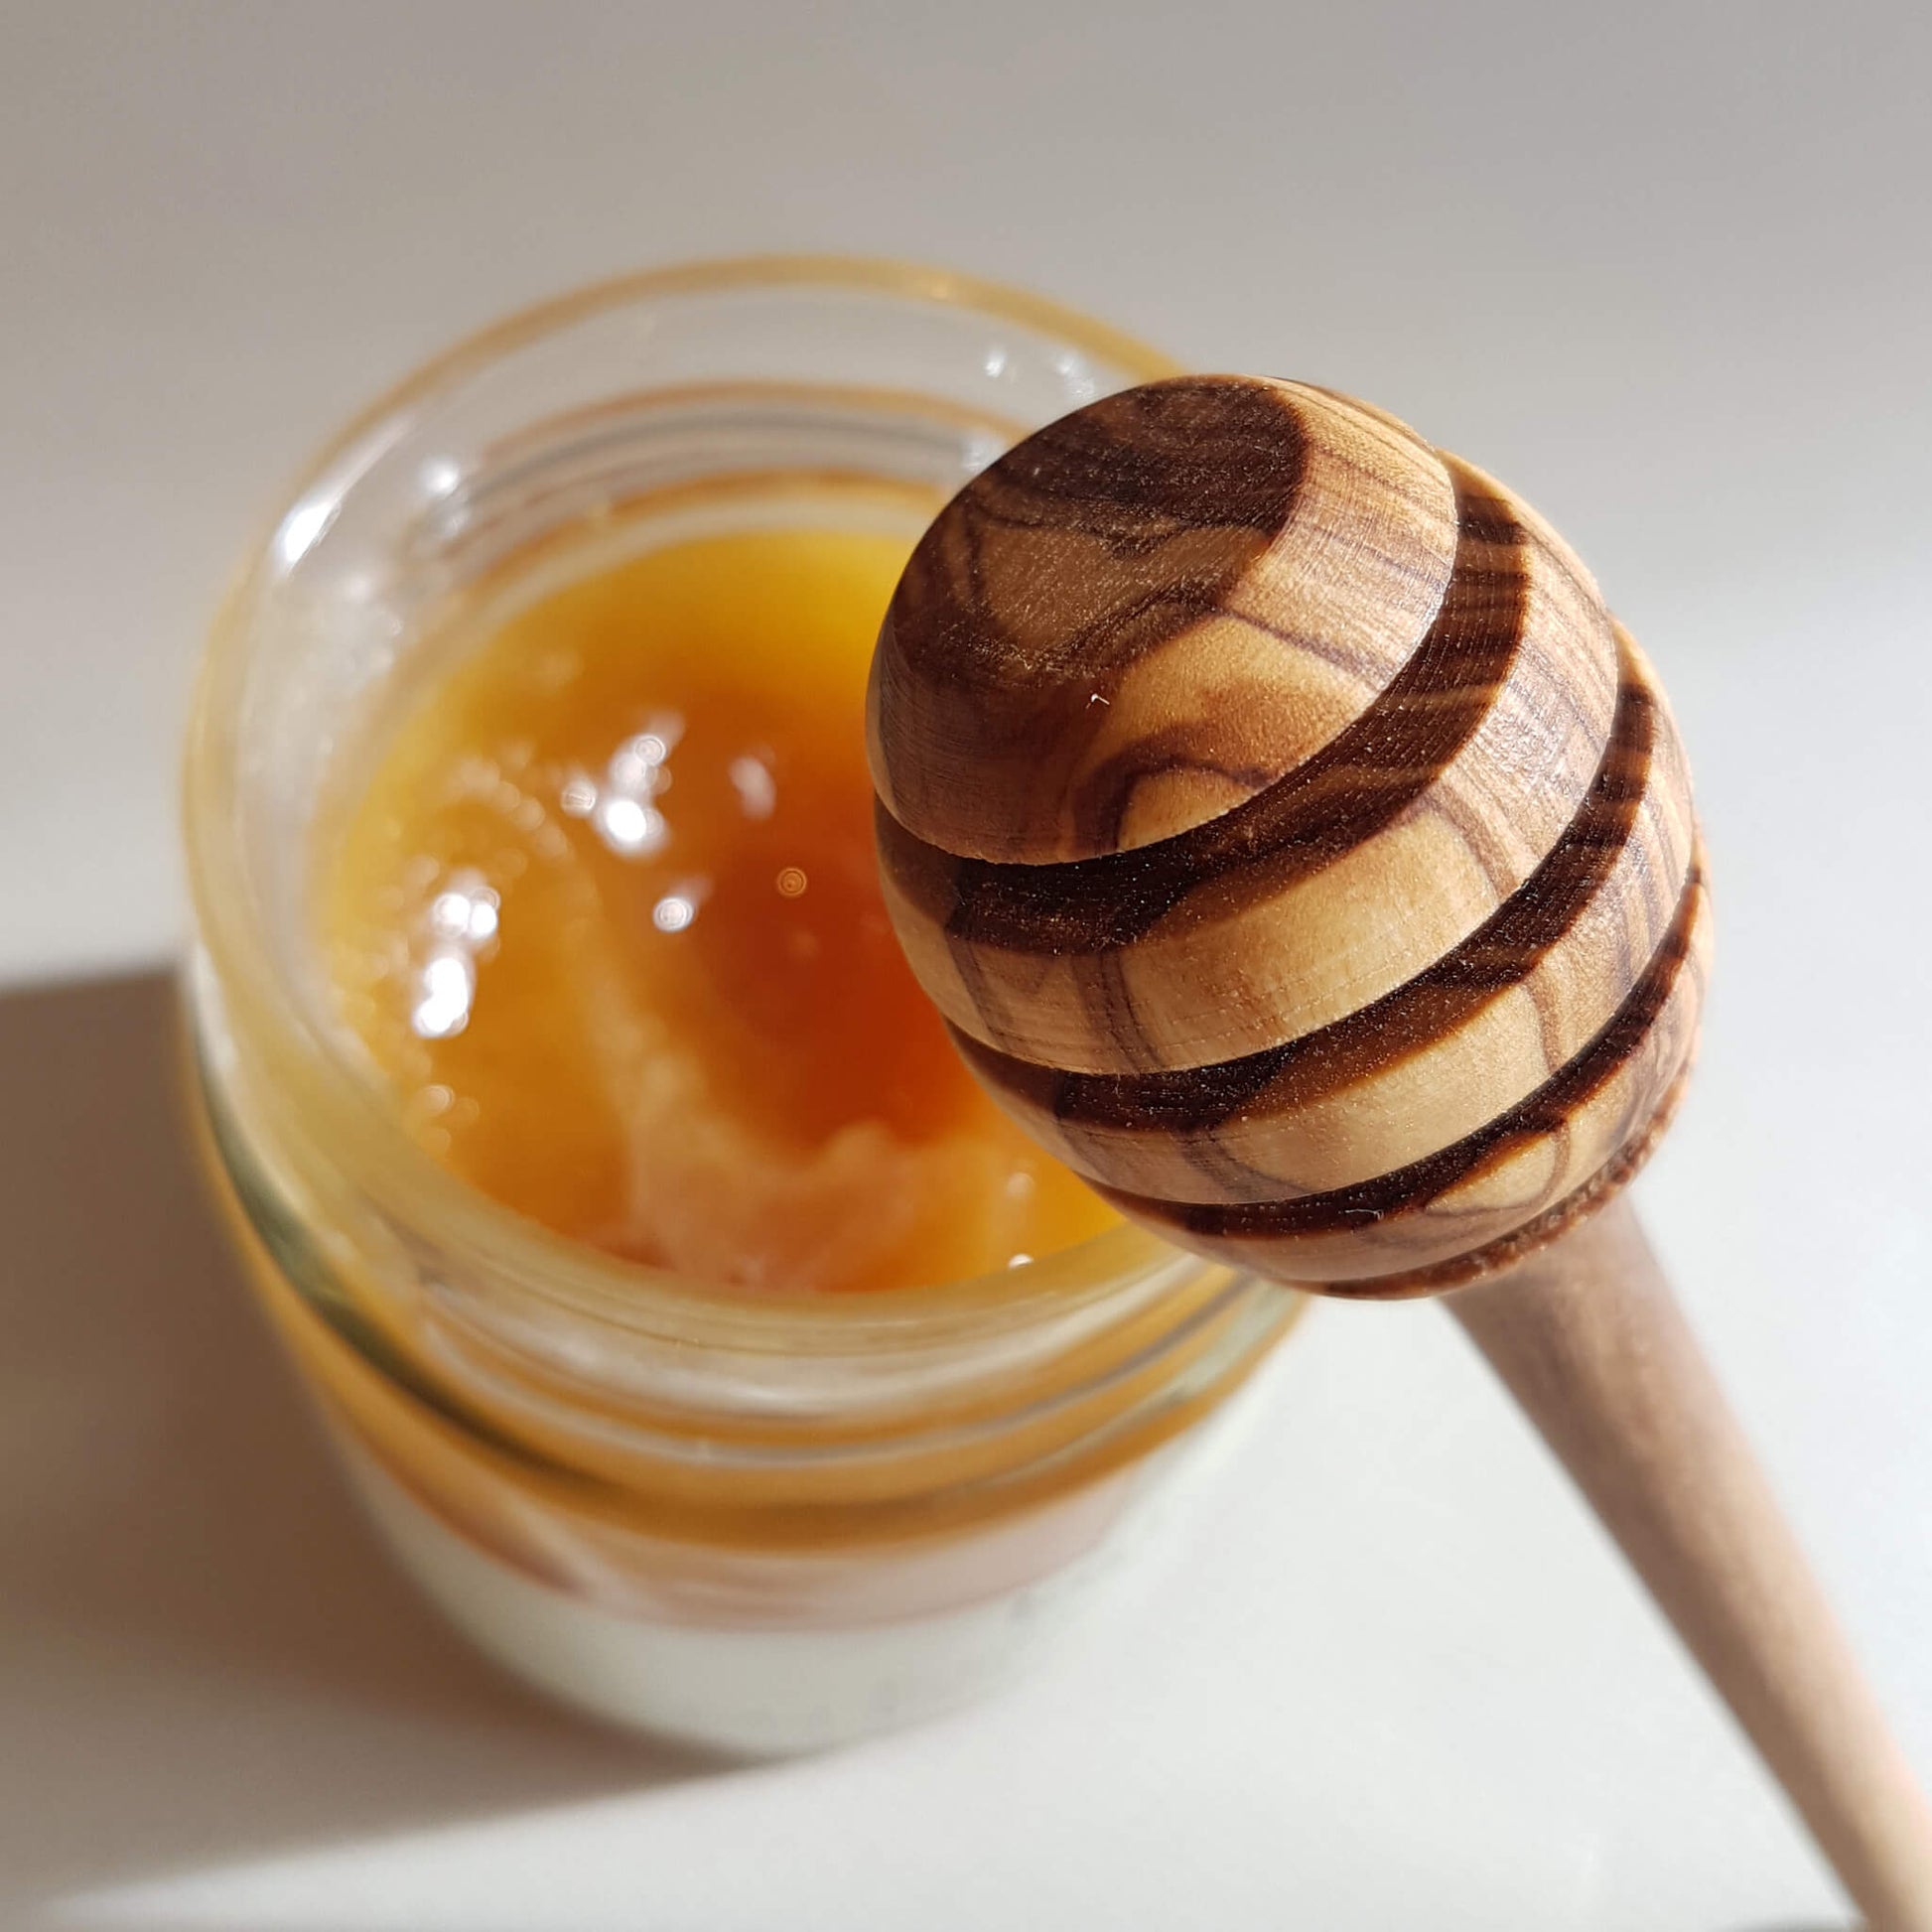 Oil & Vinegar Olive wood honey spoon 15cm, Cuillere a miel